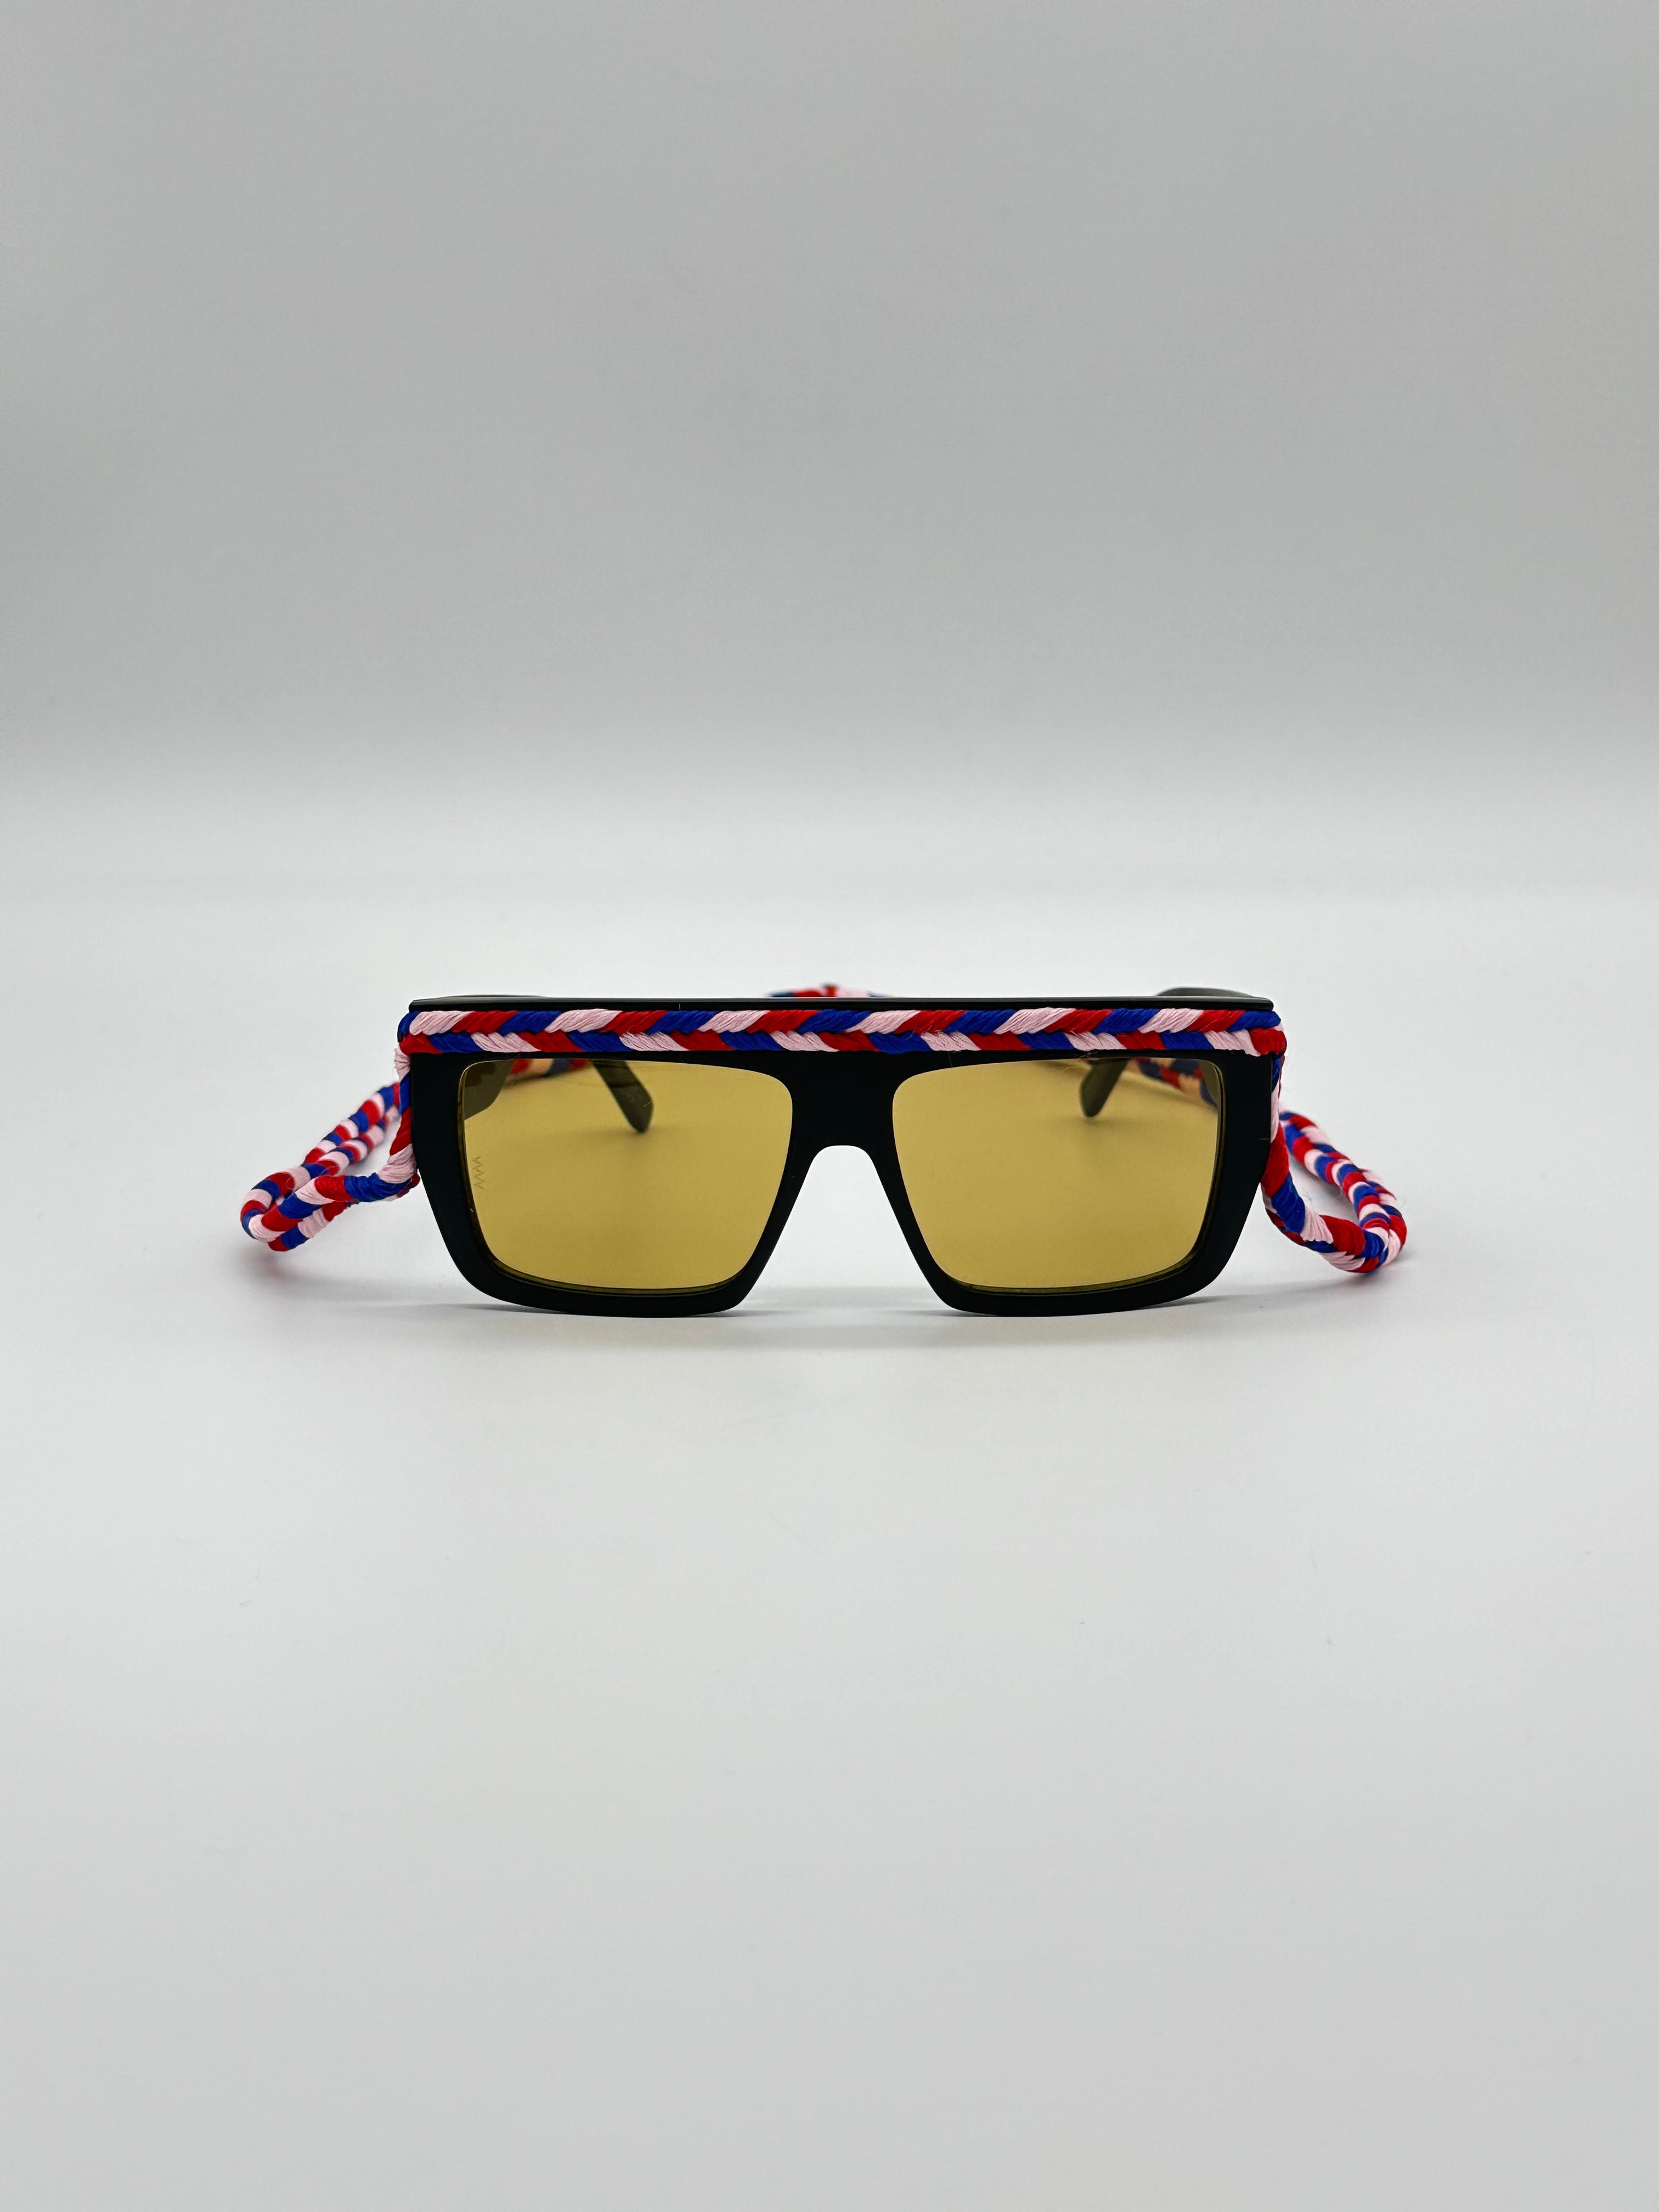 Lanyard Sunglasses